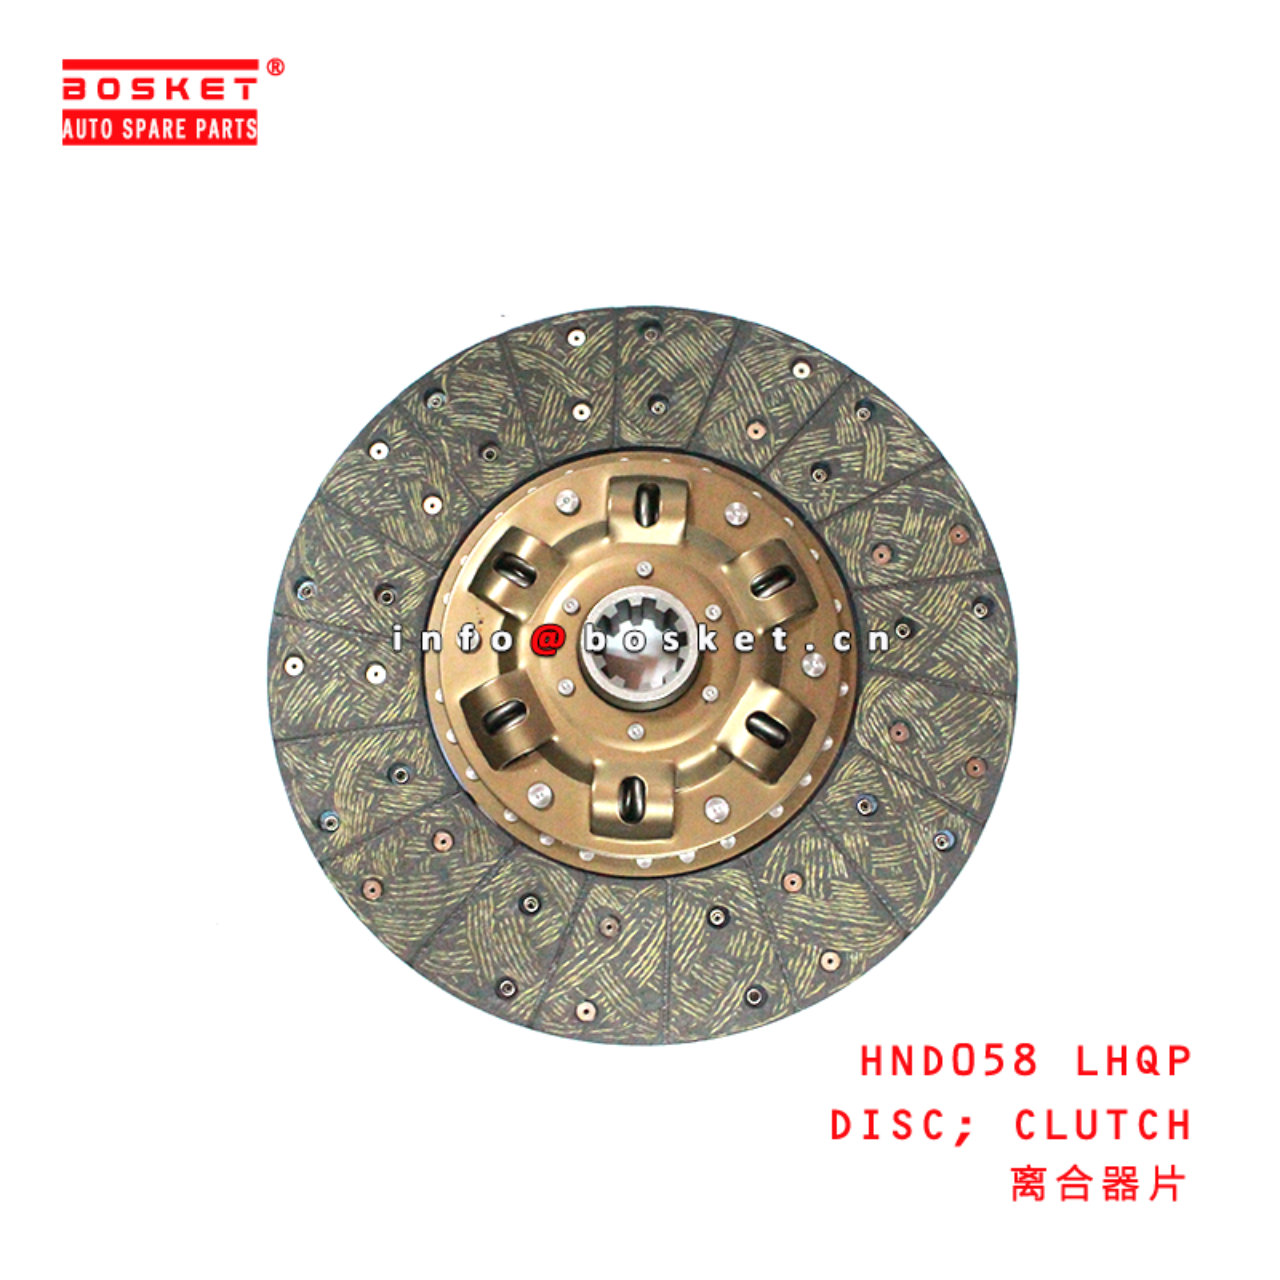 HND058 LHQP Clutch Disc Suitable for ISUZU HINO